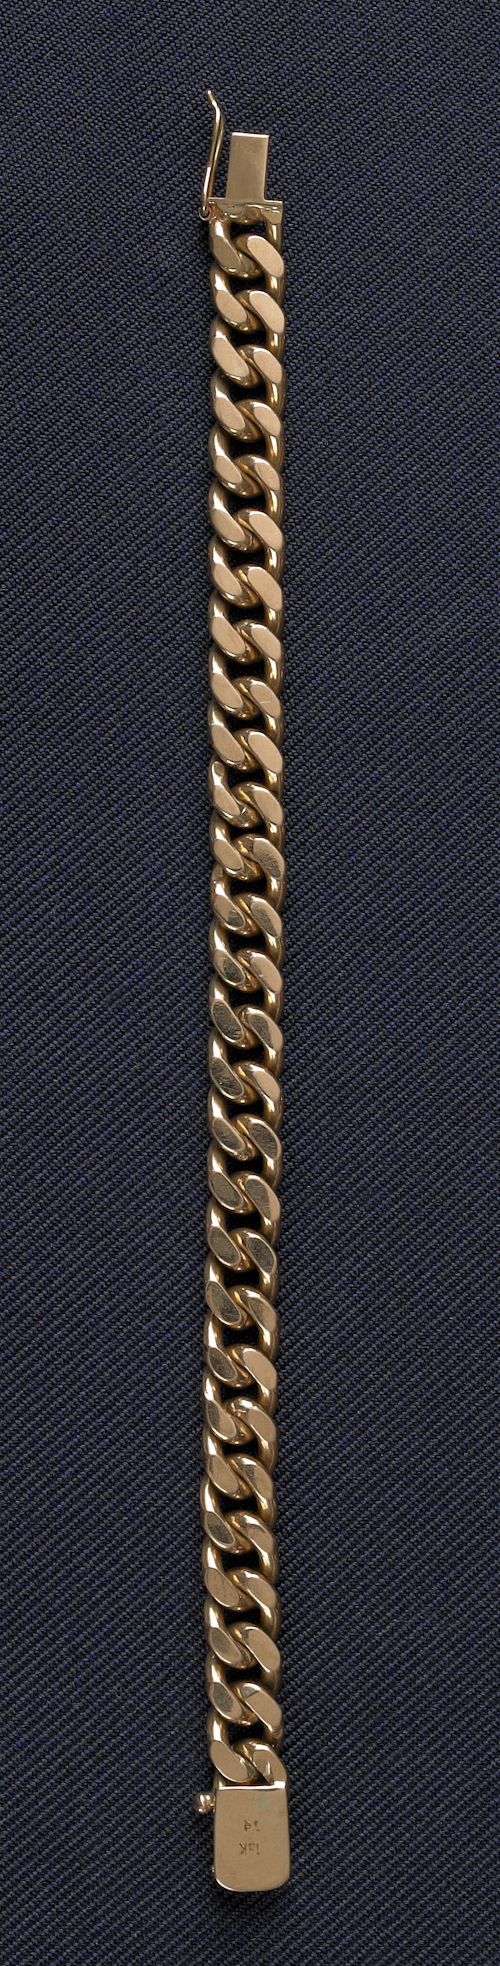 18K yellow gold curb link bracelet 17691b